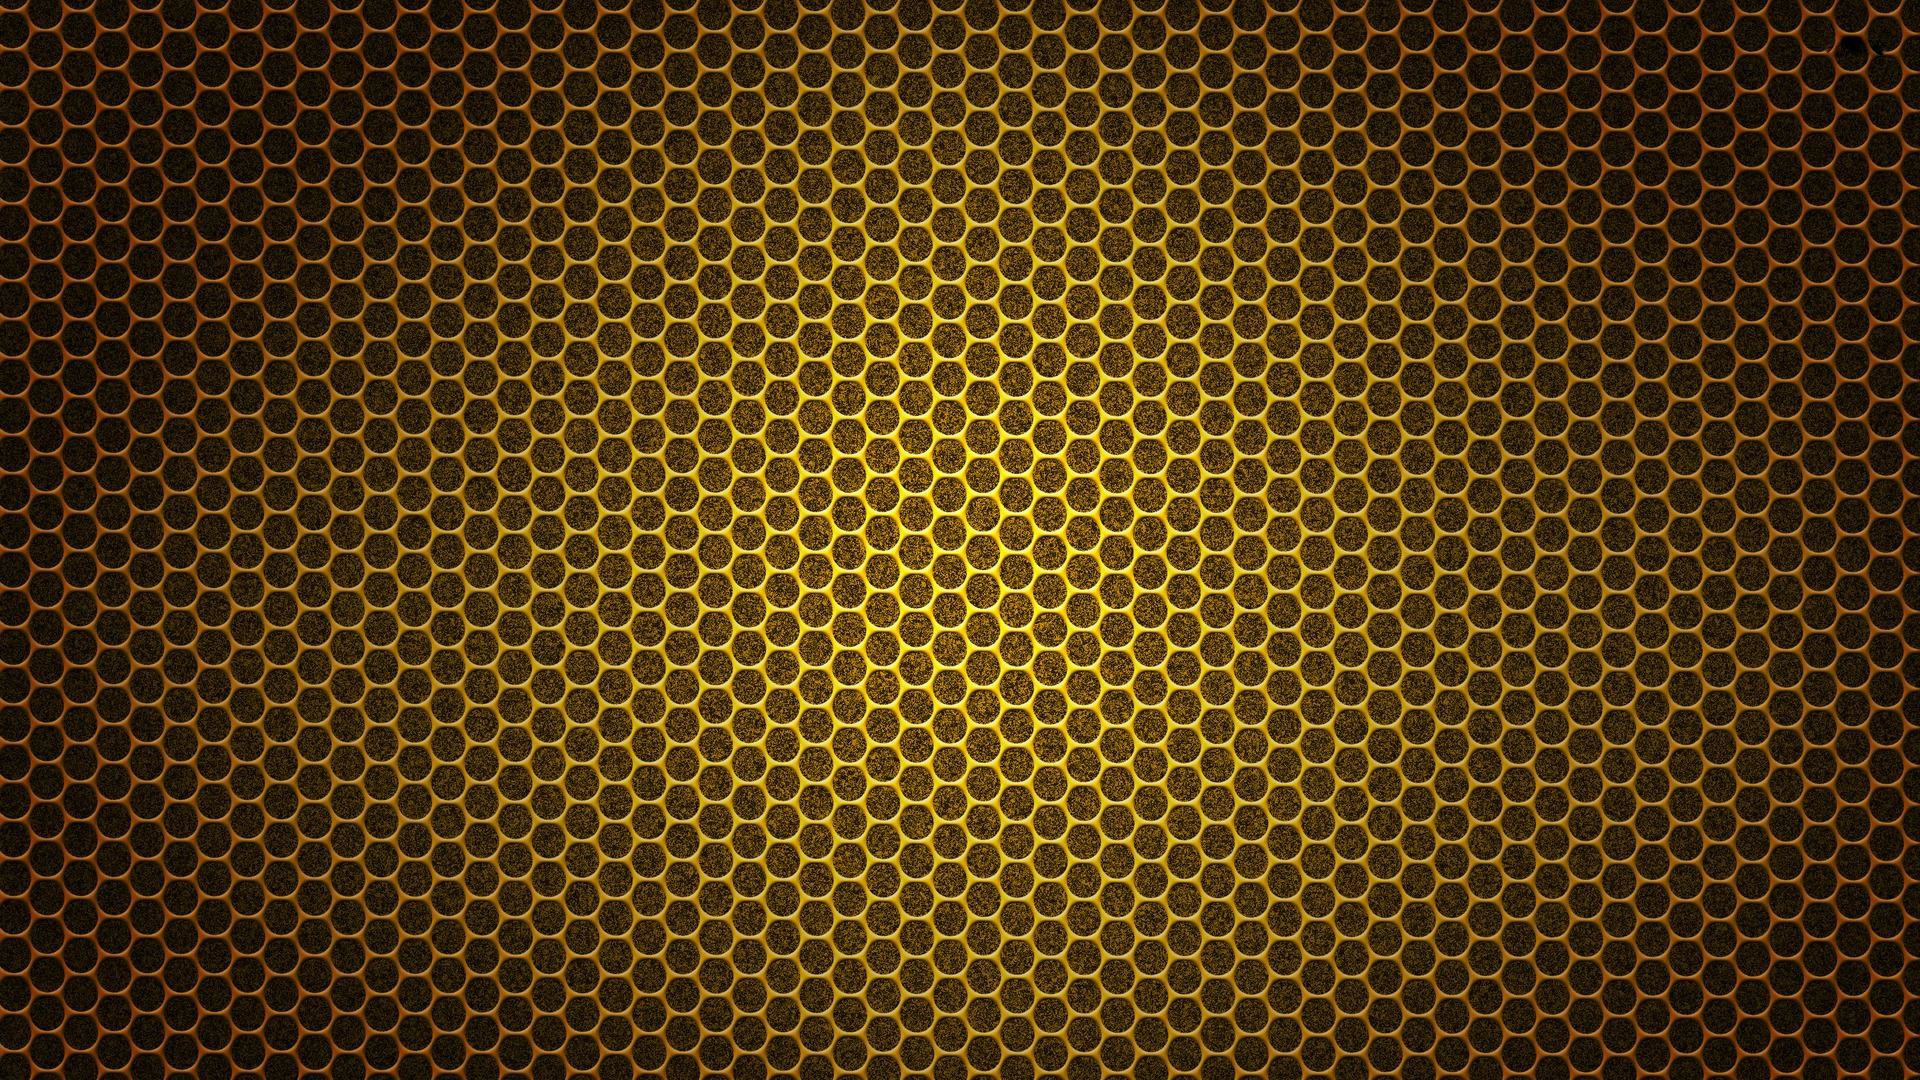 Gold pattern desktop background wallpapers